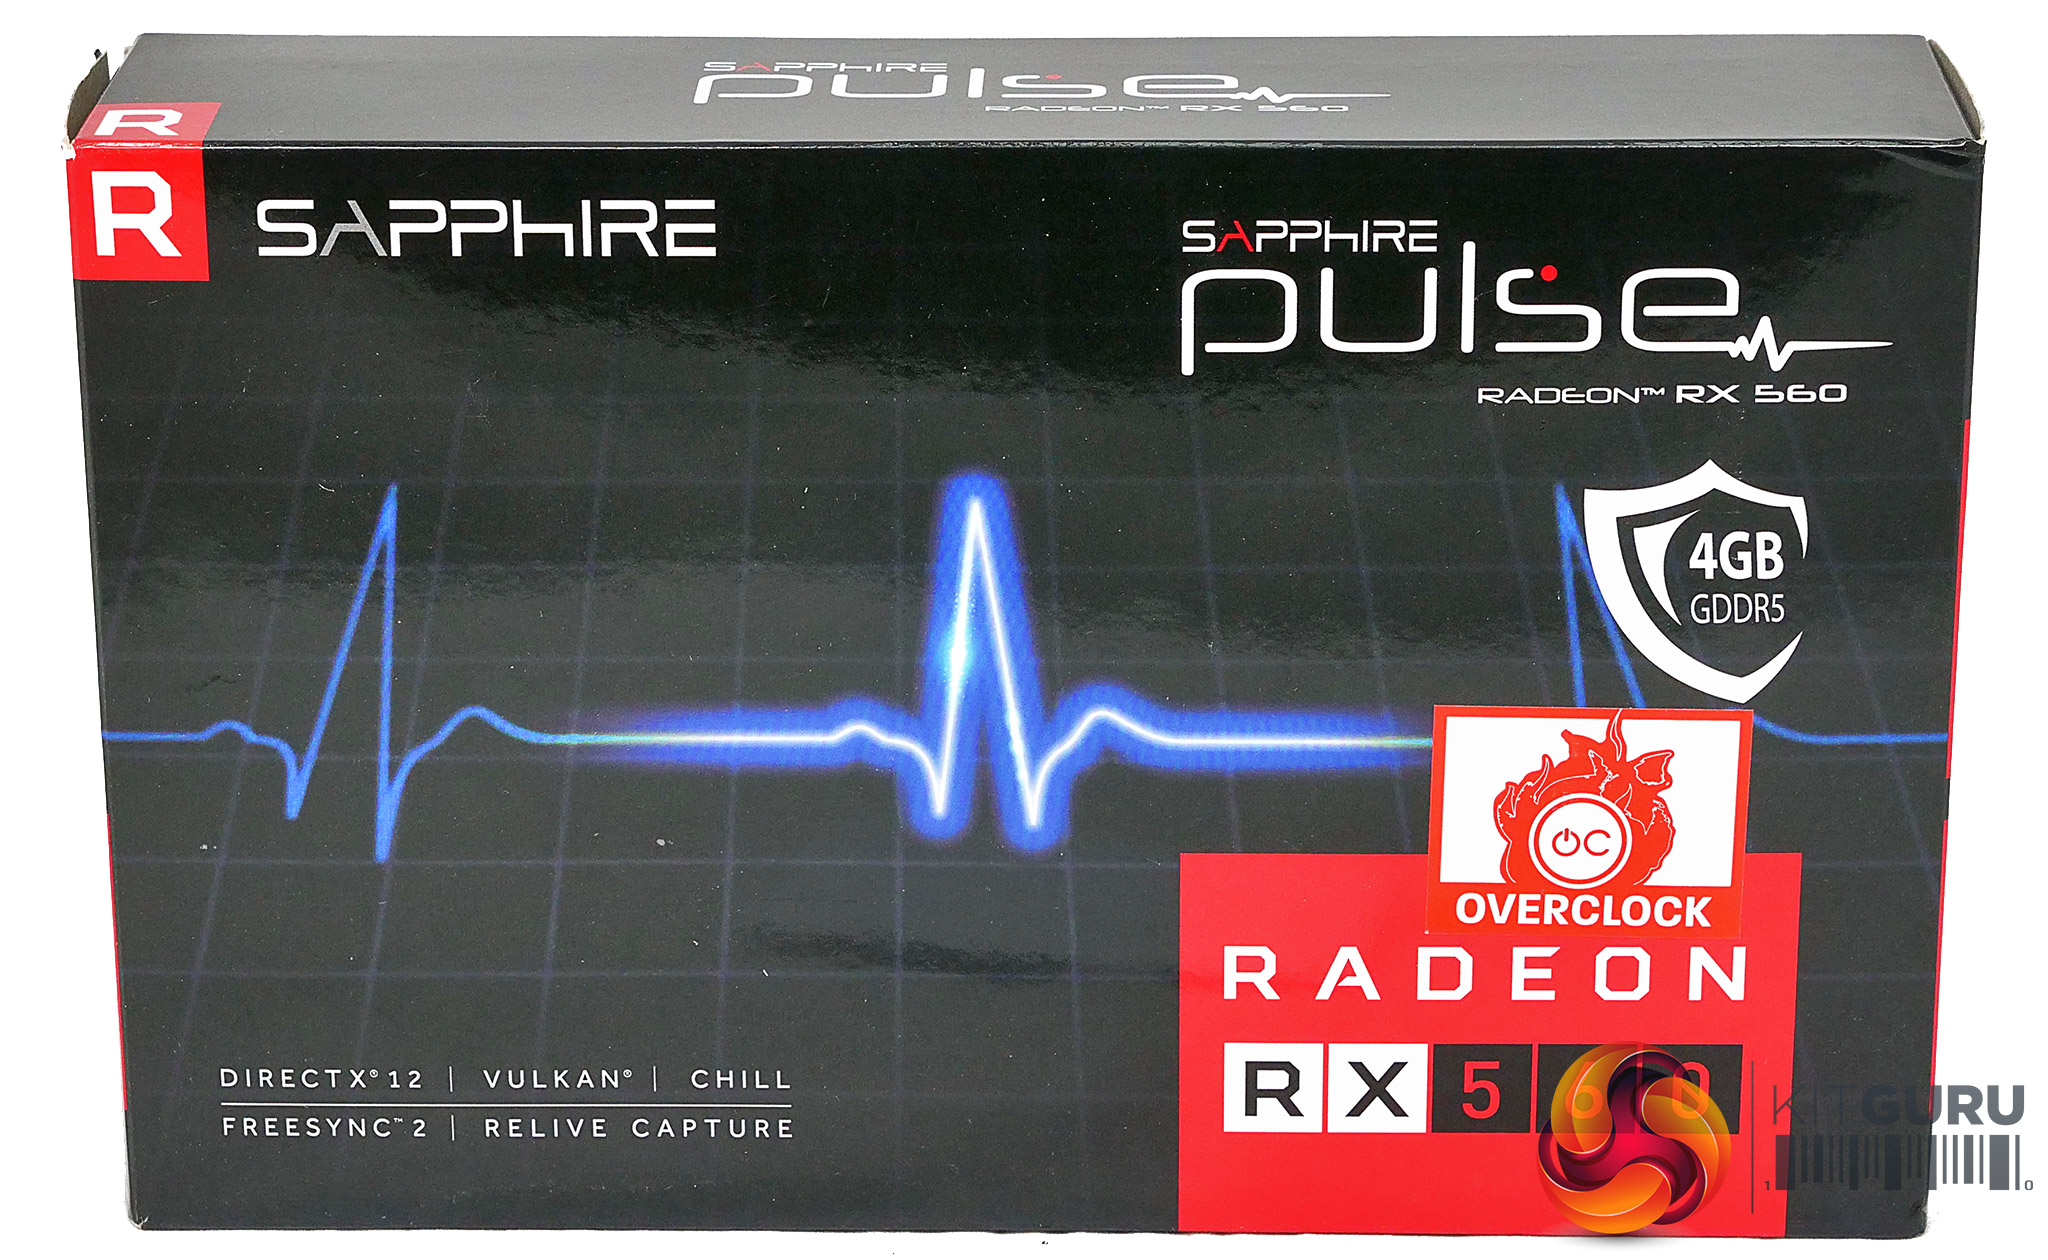 AMD Ryzen 5 2400G & Ryzen 3 2200G Raven Ridge APU Review | KitGuru